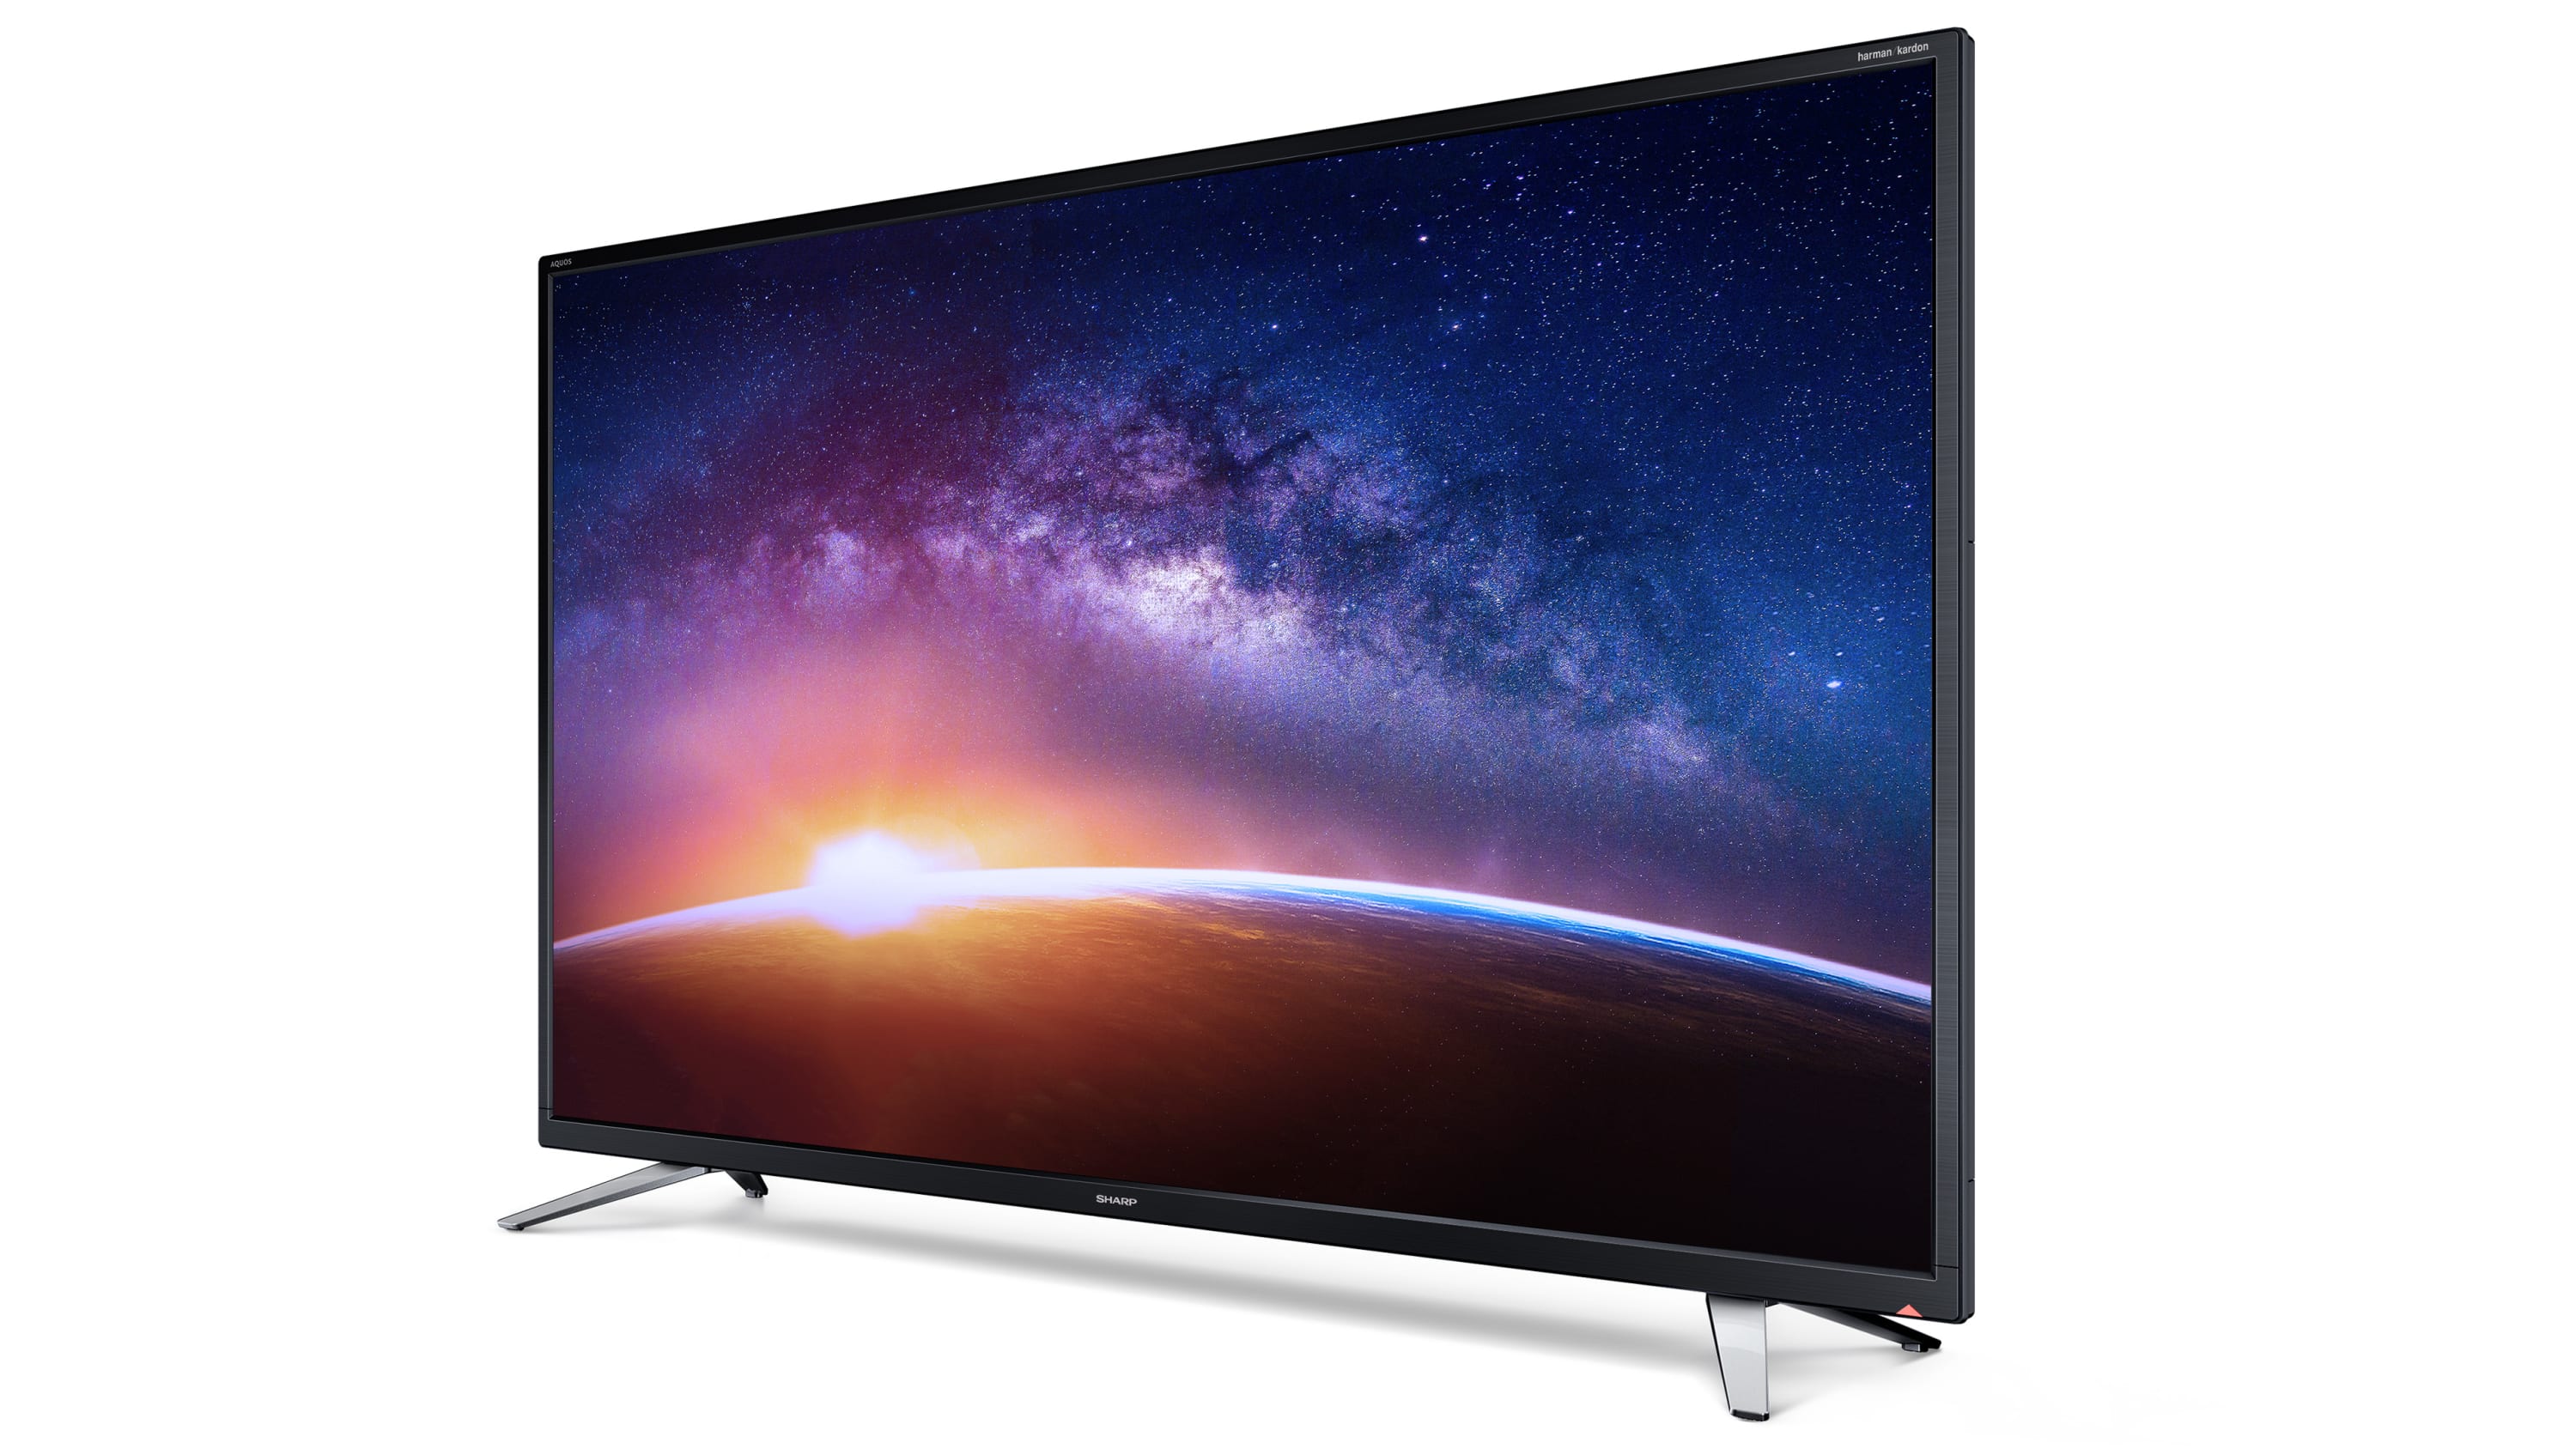 Smart-tv HD/Full HD - 42" FULL HD SMART